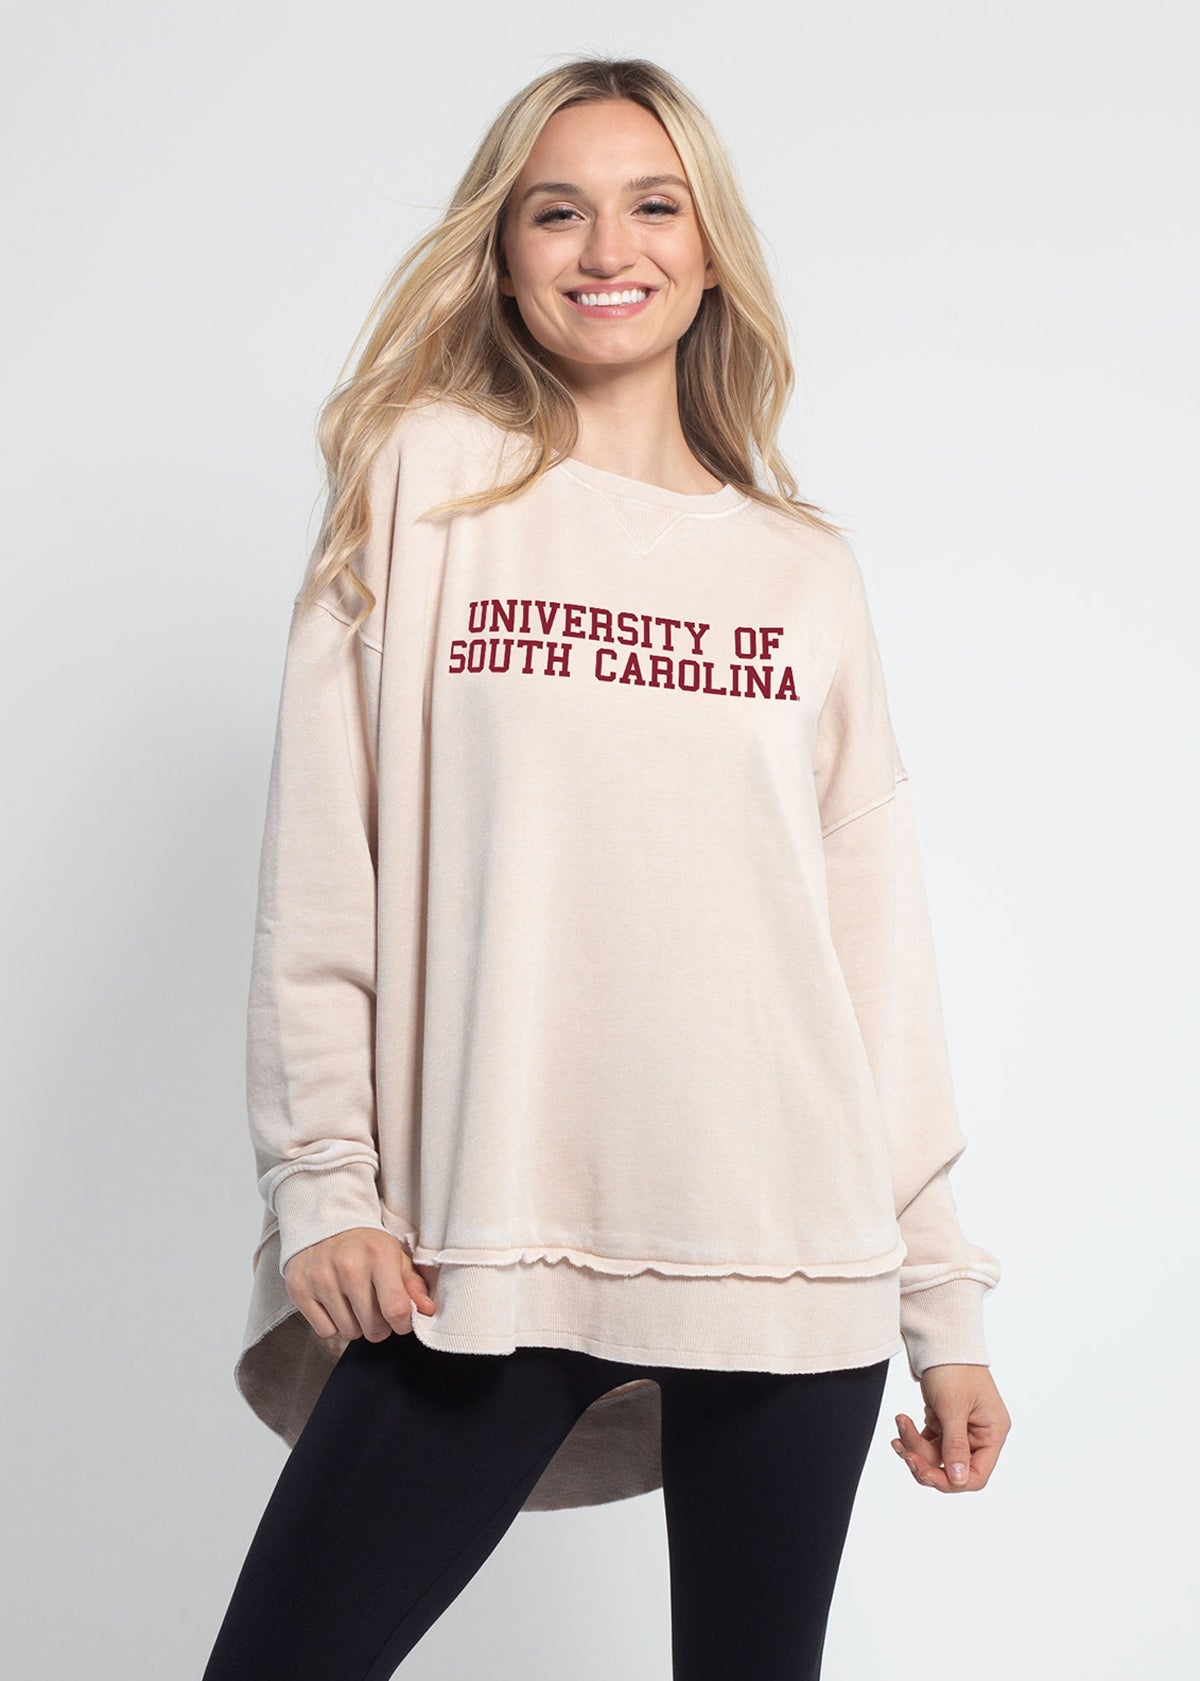 South Carolina Gamecocks sweatshirt